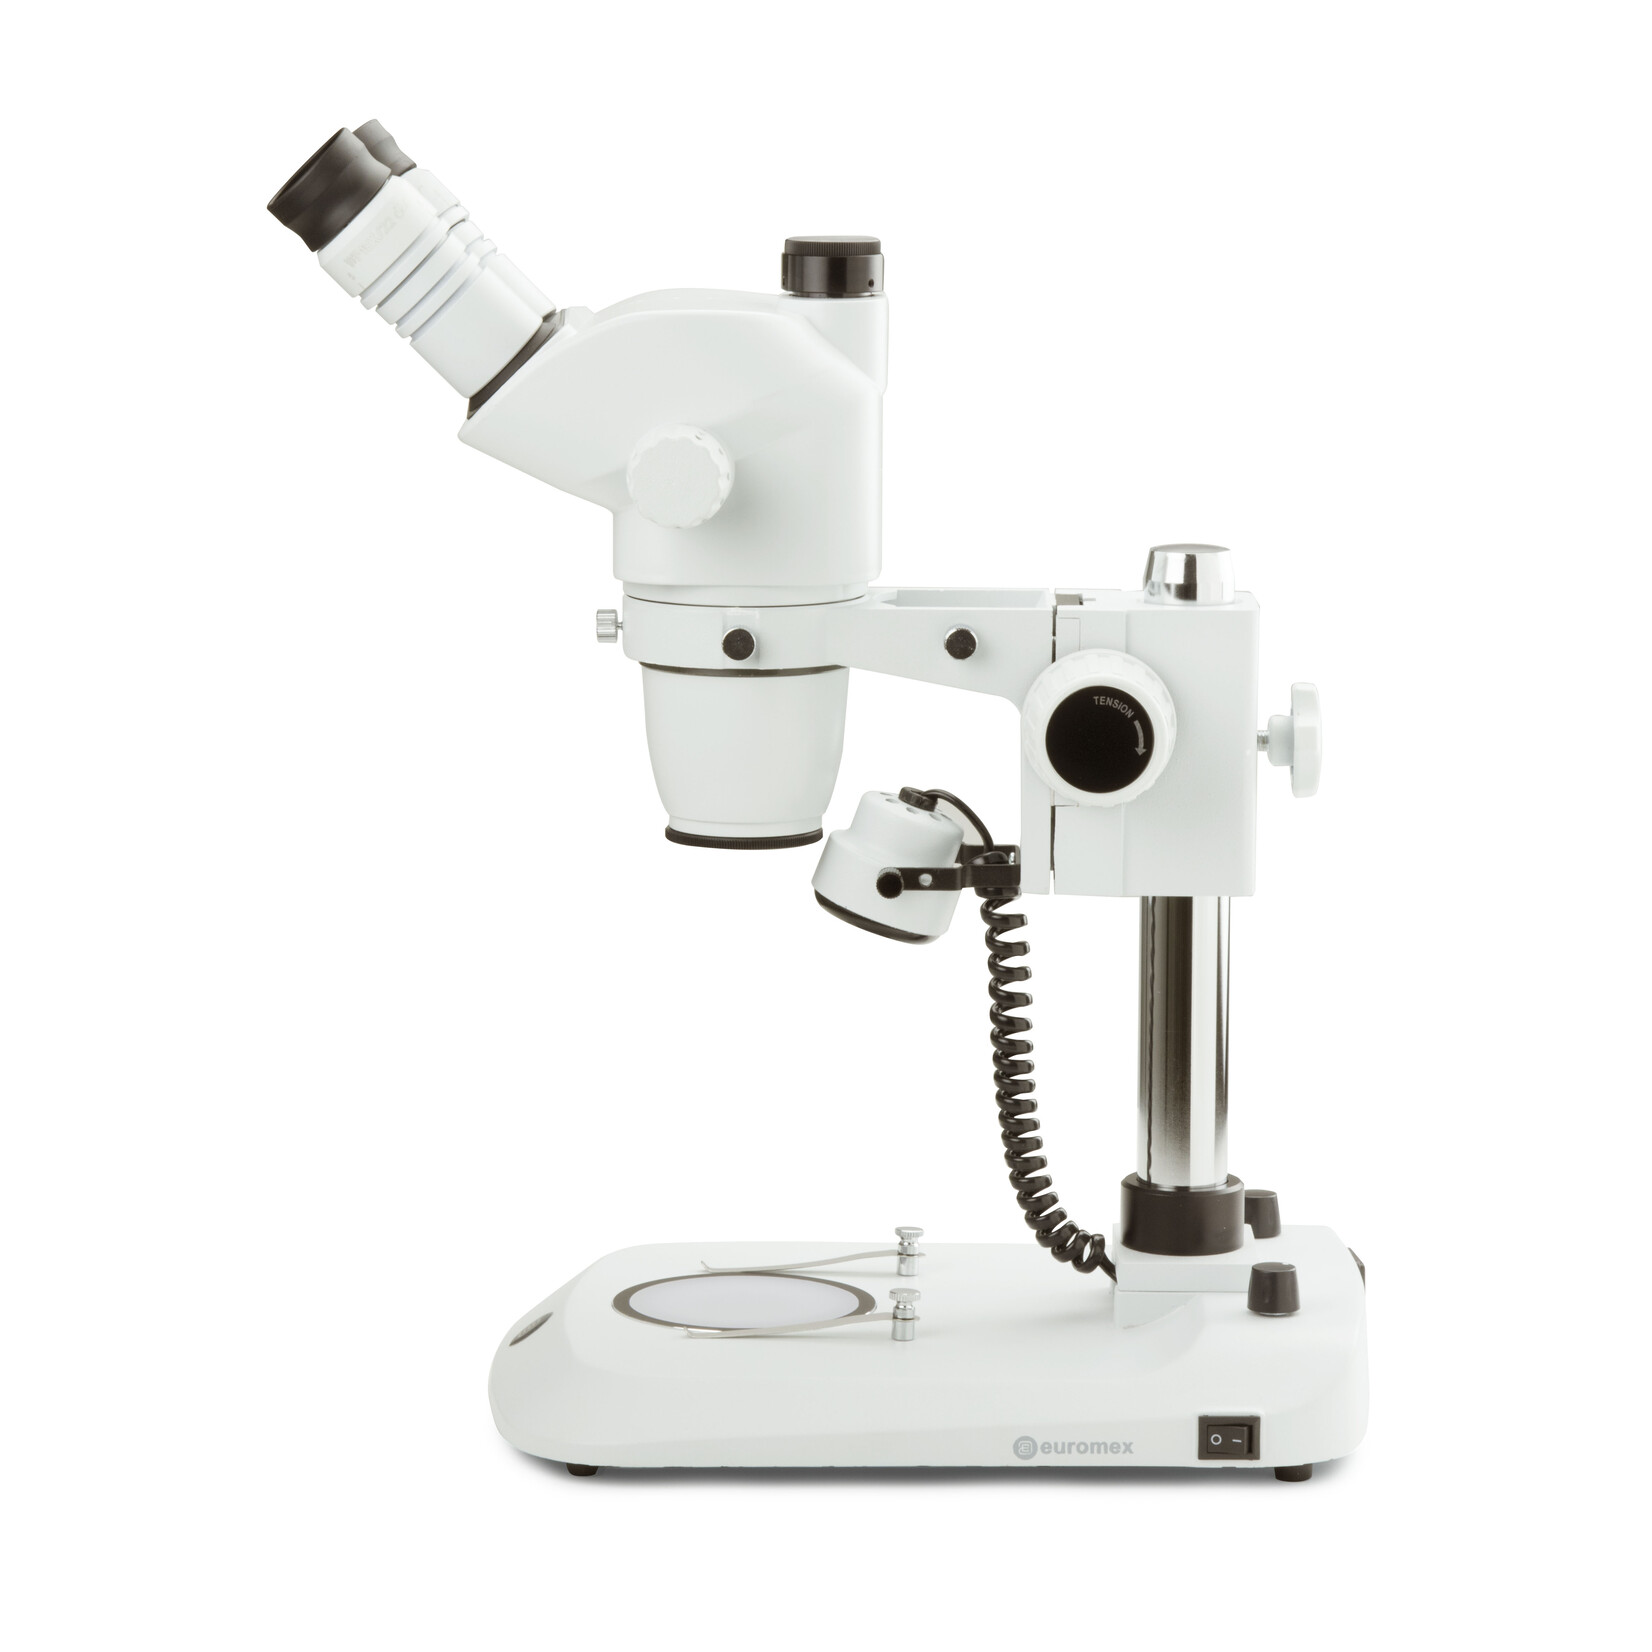 Microscópio trinocular estéreo com zoom NexiusZoom EVO, objetiva com zoom de 0,65x a 5,5x